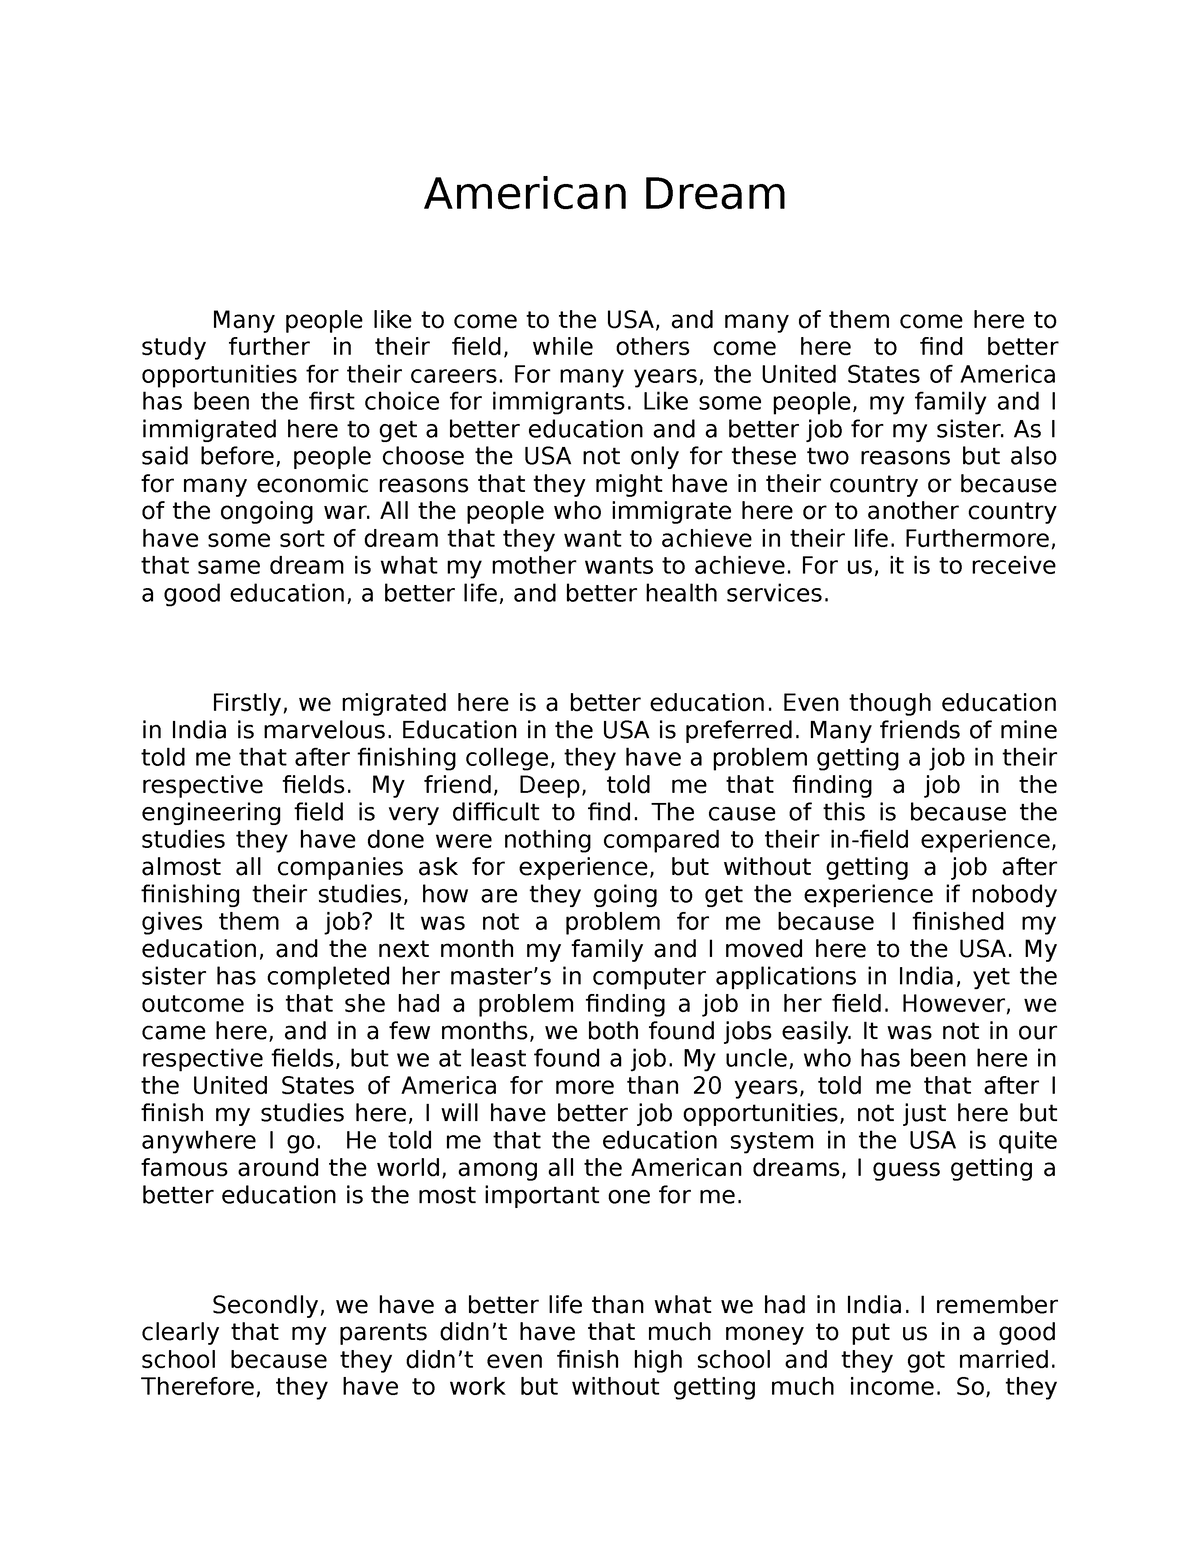 the american dream essay topics